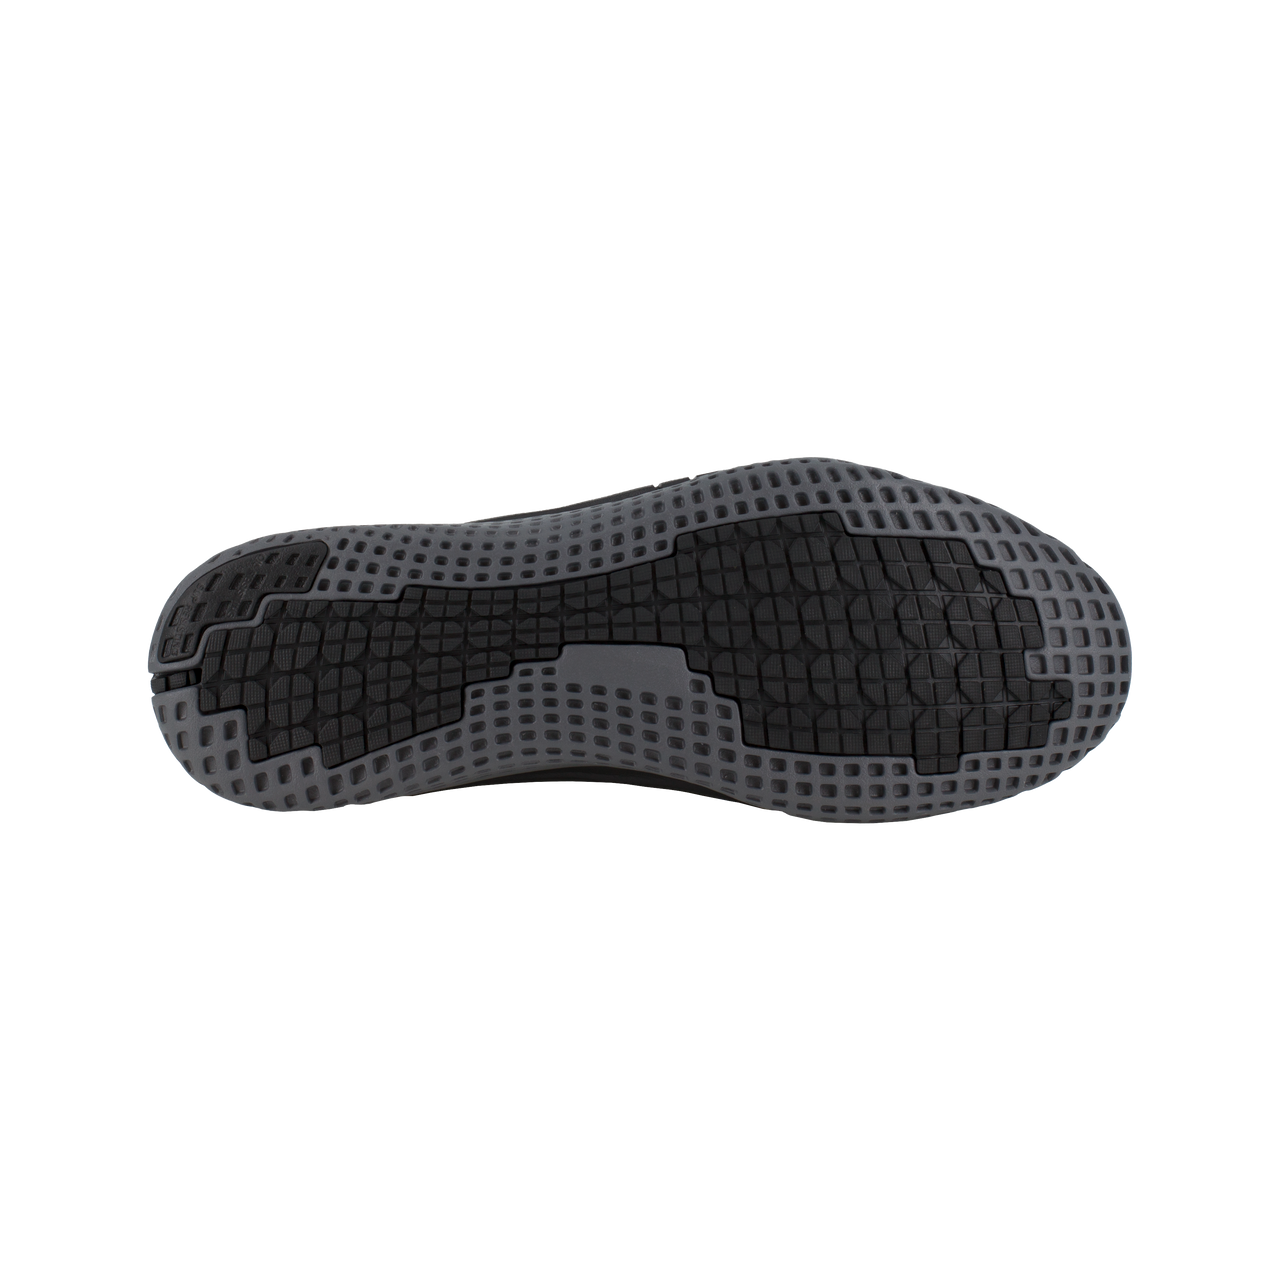 Reebok ZPrint Work - RB4251 - Men's Athletic Shoes - Steel Toe, Comfortable